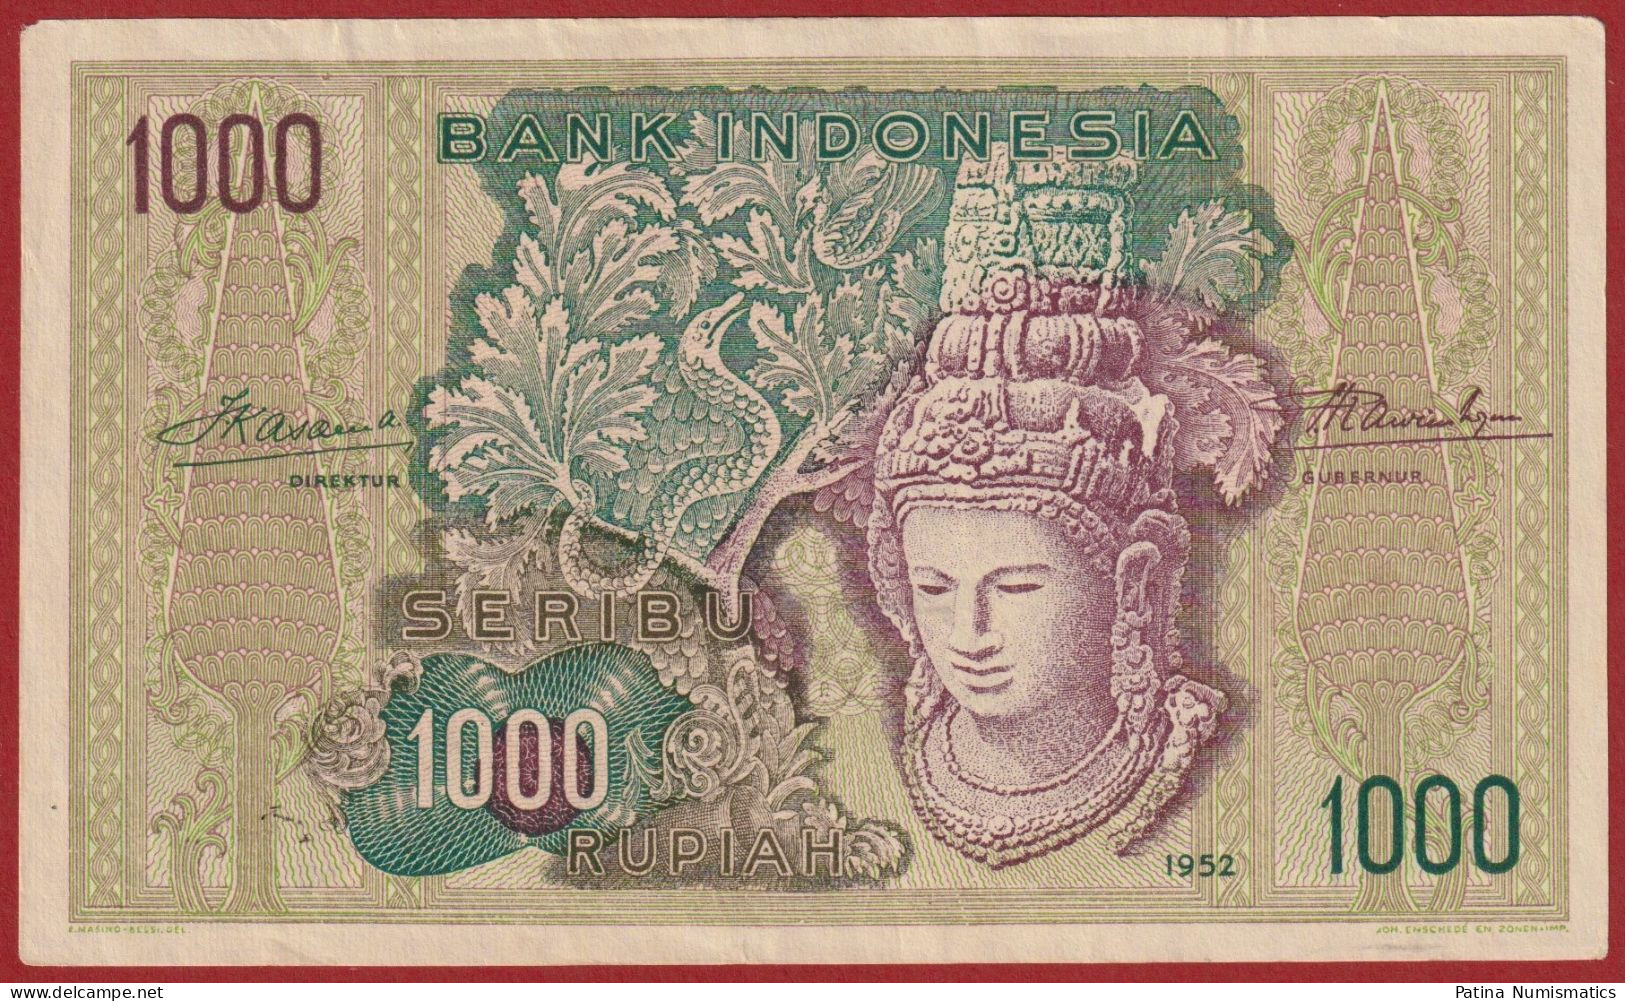 Indonesia 1000 Rupiah 1952 P 48 WW Prefix VERY RARE Crisp UNC - Indonesia